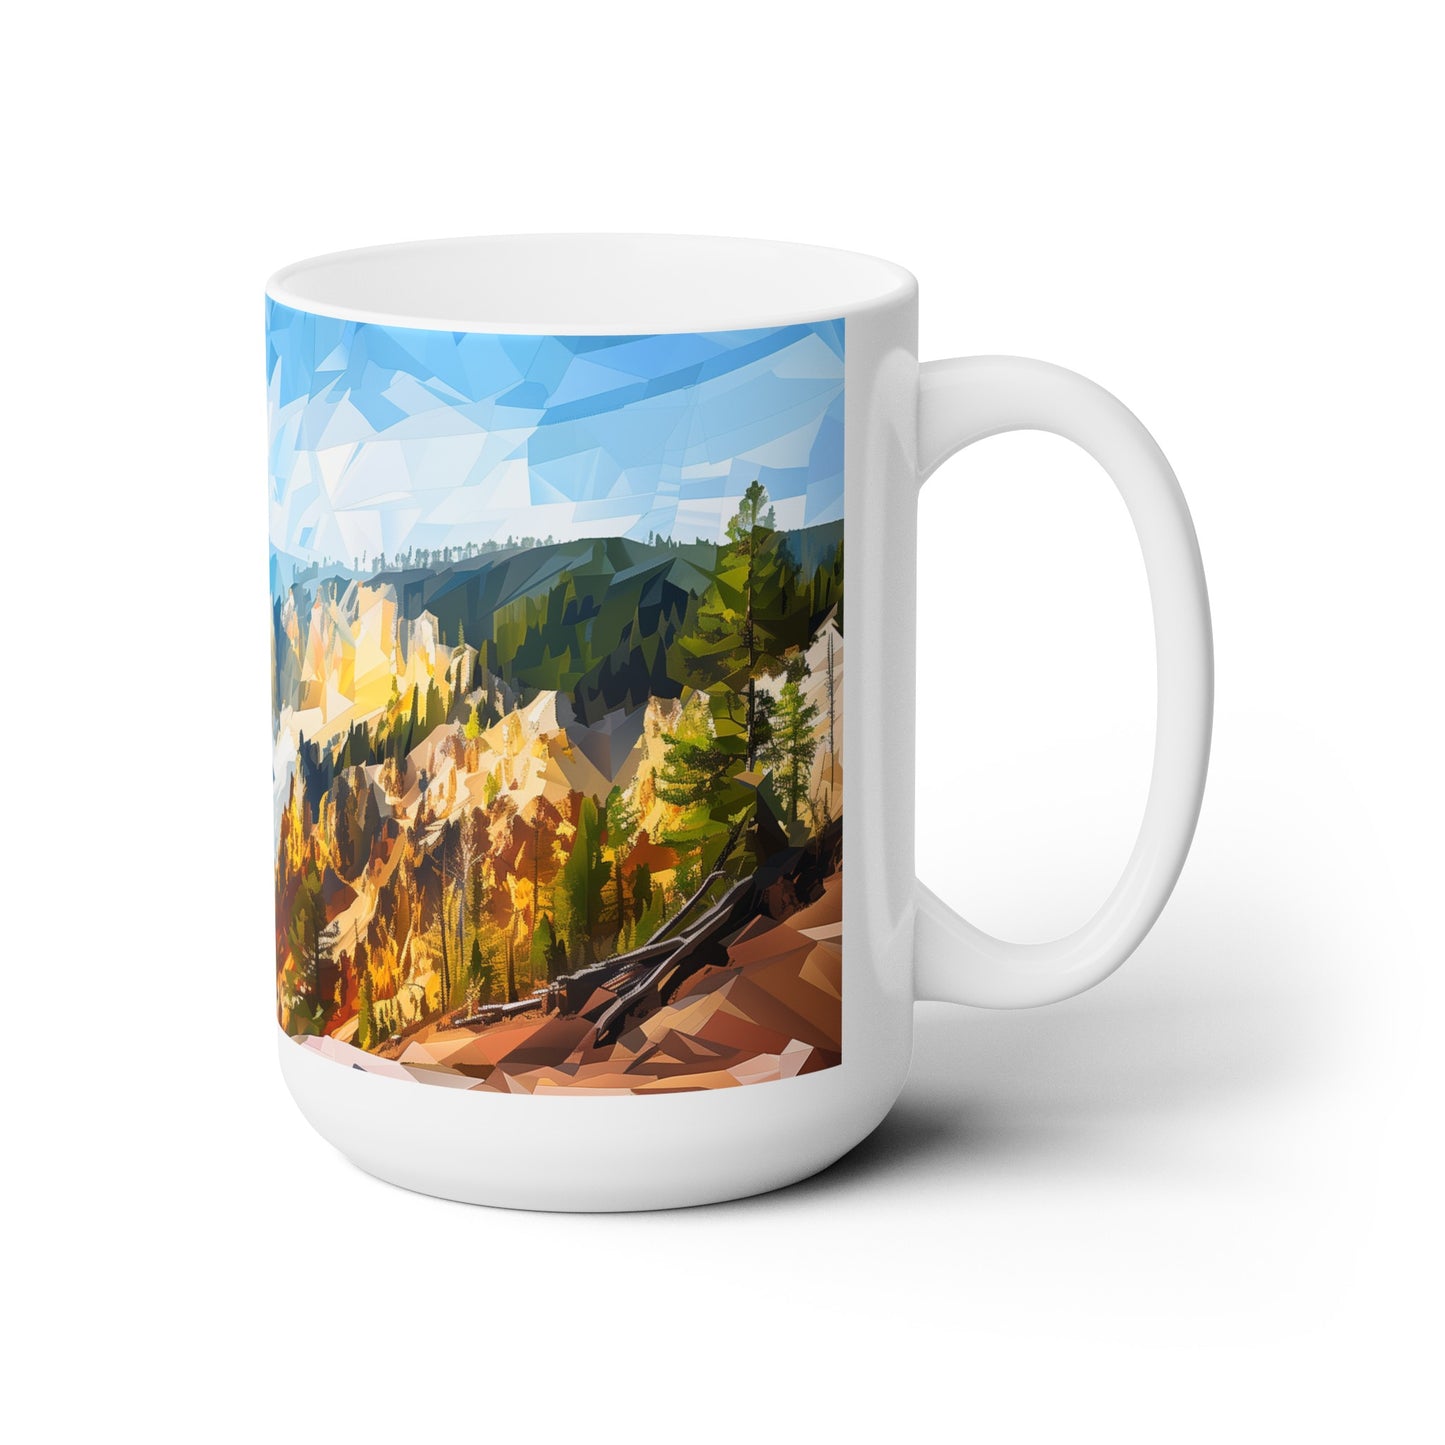 Large Collectible Coffee Mug with Yellowstone National Park Design, 15oz